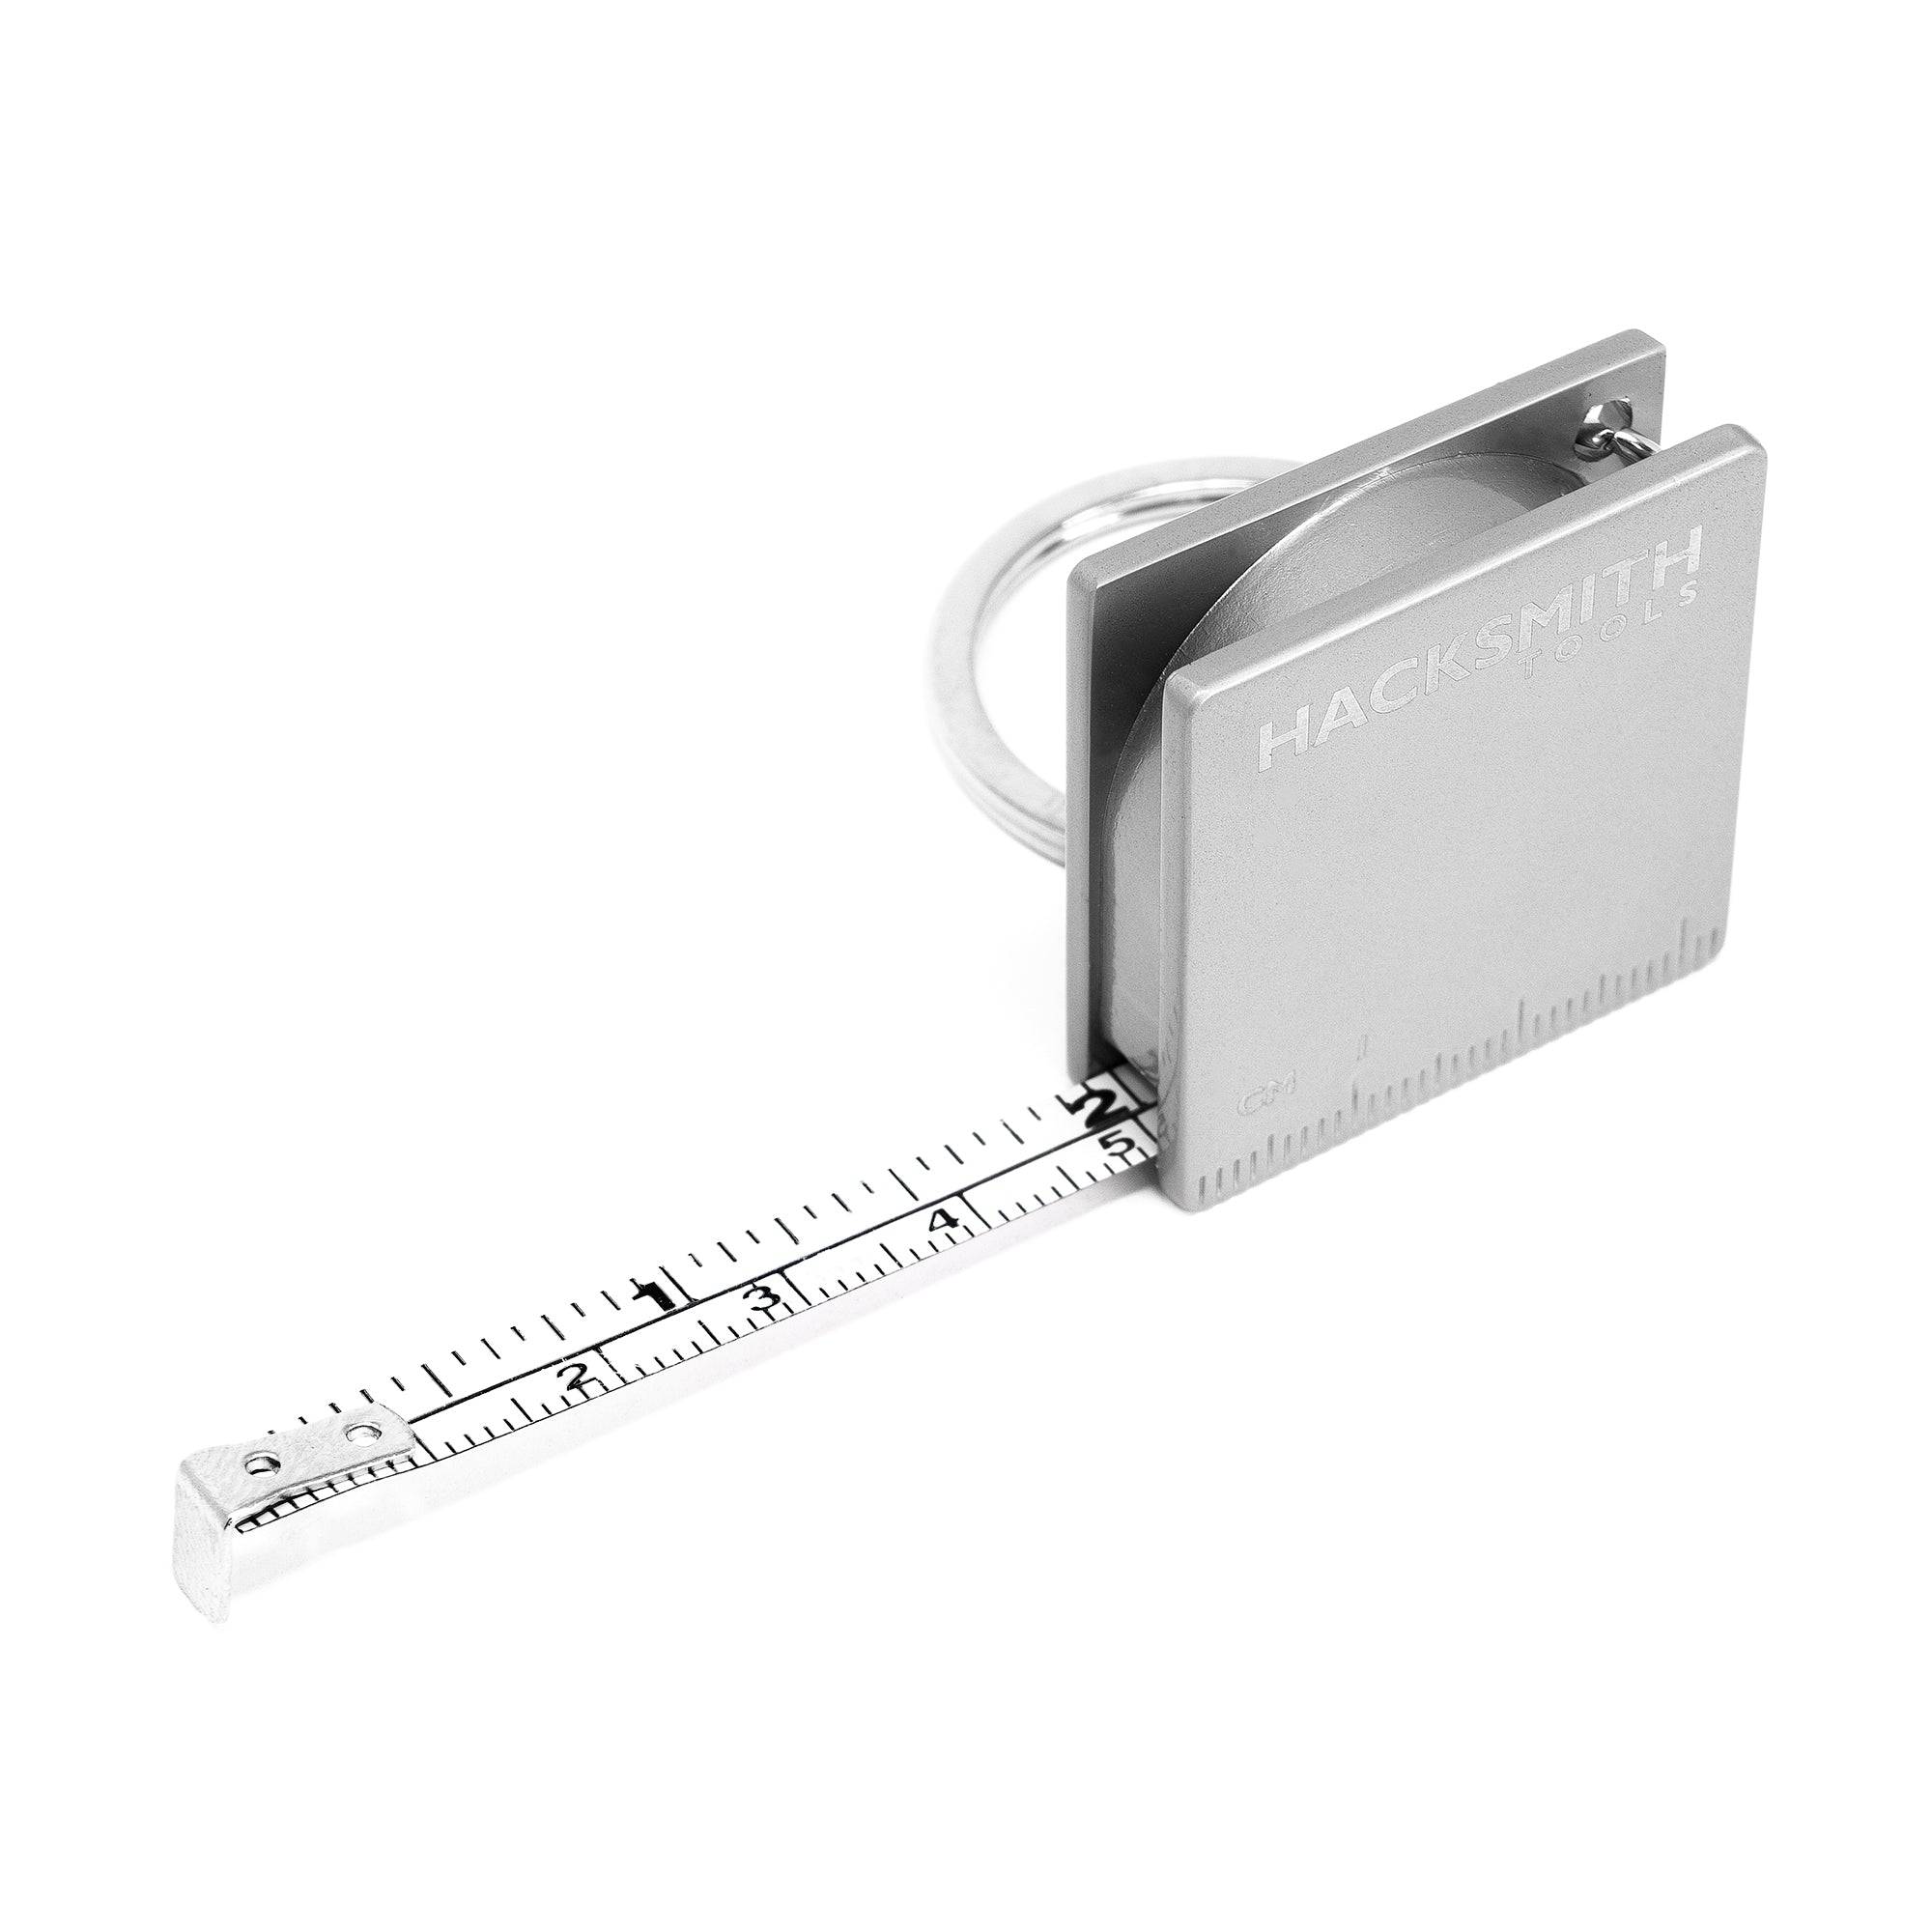 Mini-Tape Measure Keychain (2 feet / 61cm) - Hacksmith.store